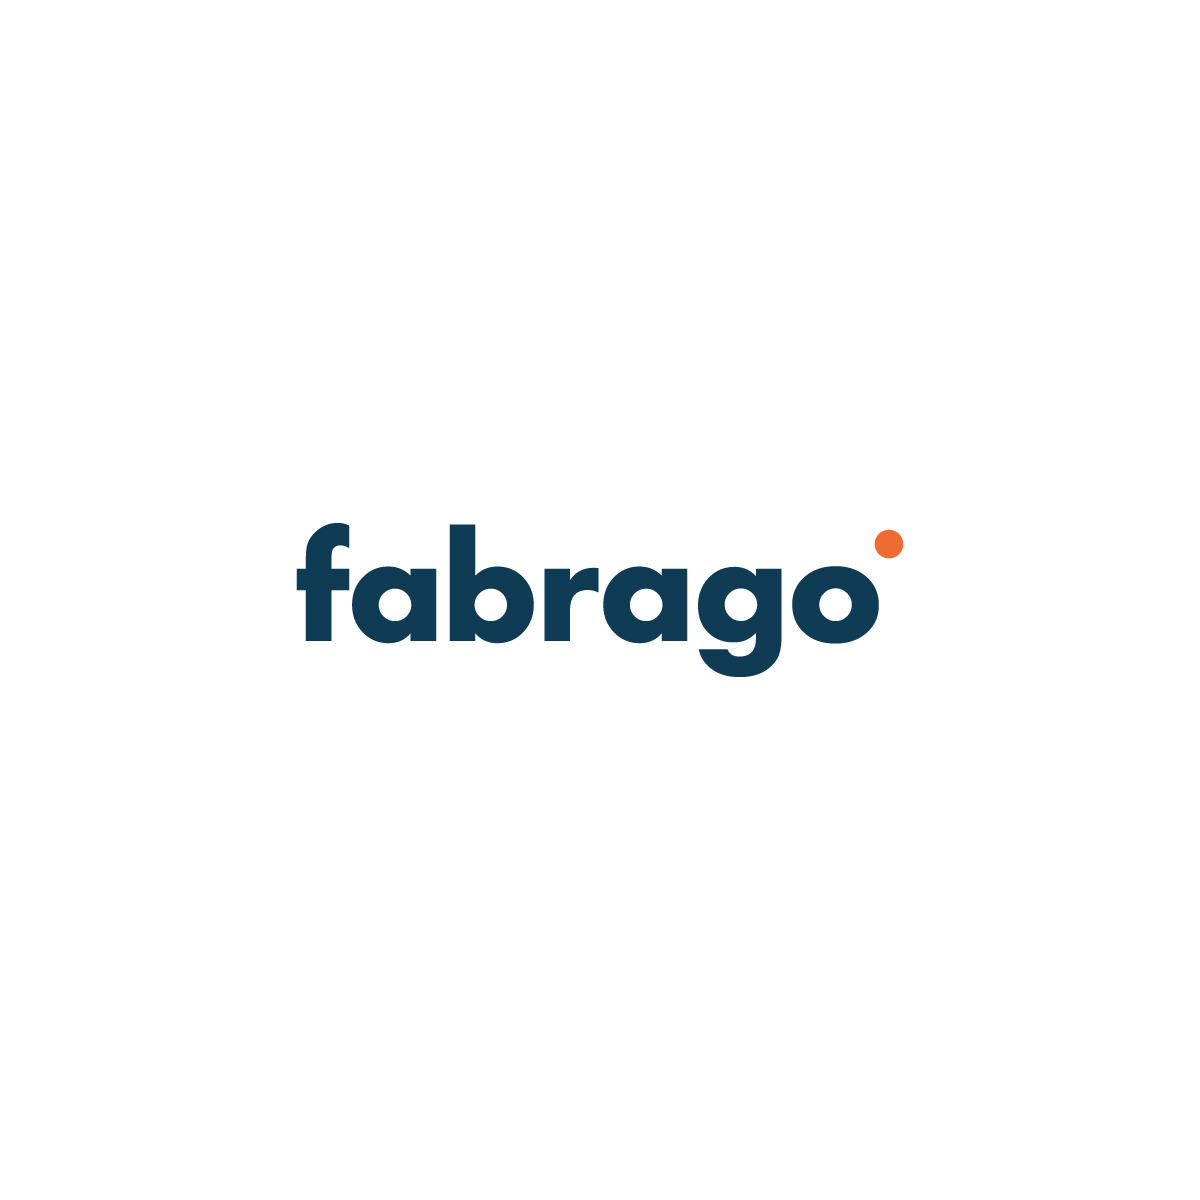 Fabrago for Shopify